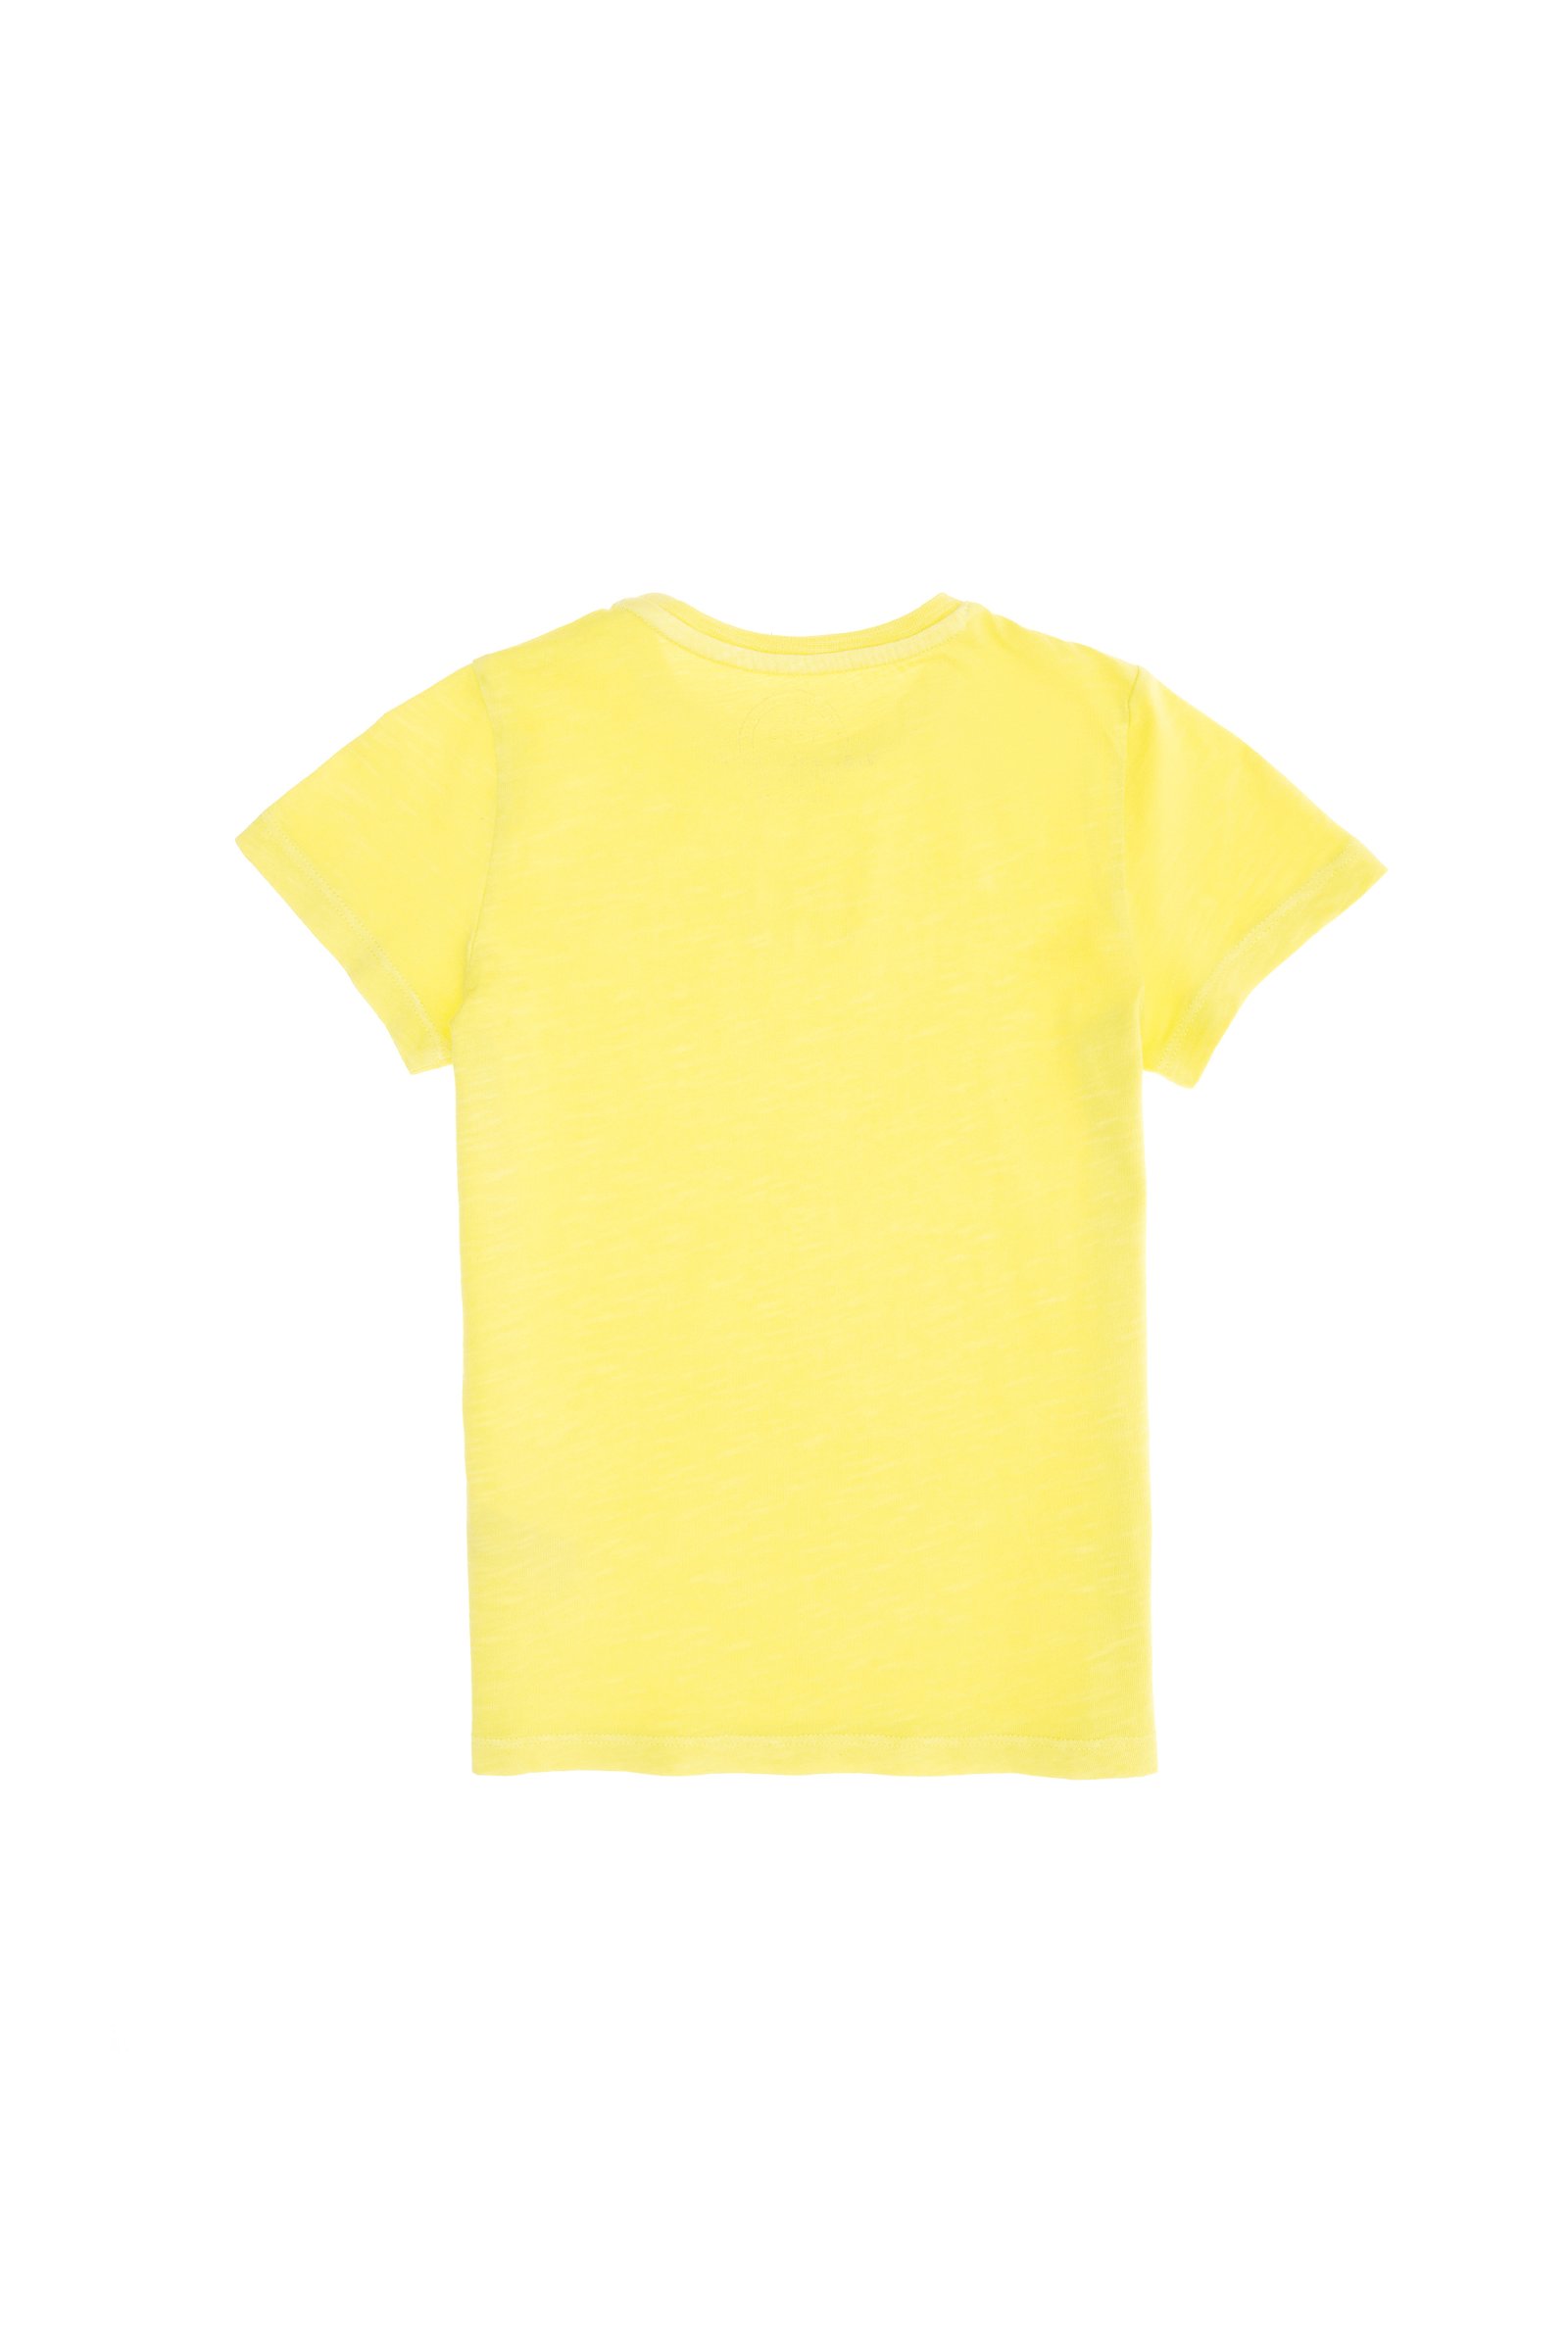 تی شرت یقه گرد لیمویی  استاندارد فیت  پسرانه یو اس پولو | US POLO ASSN